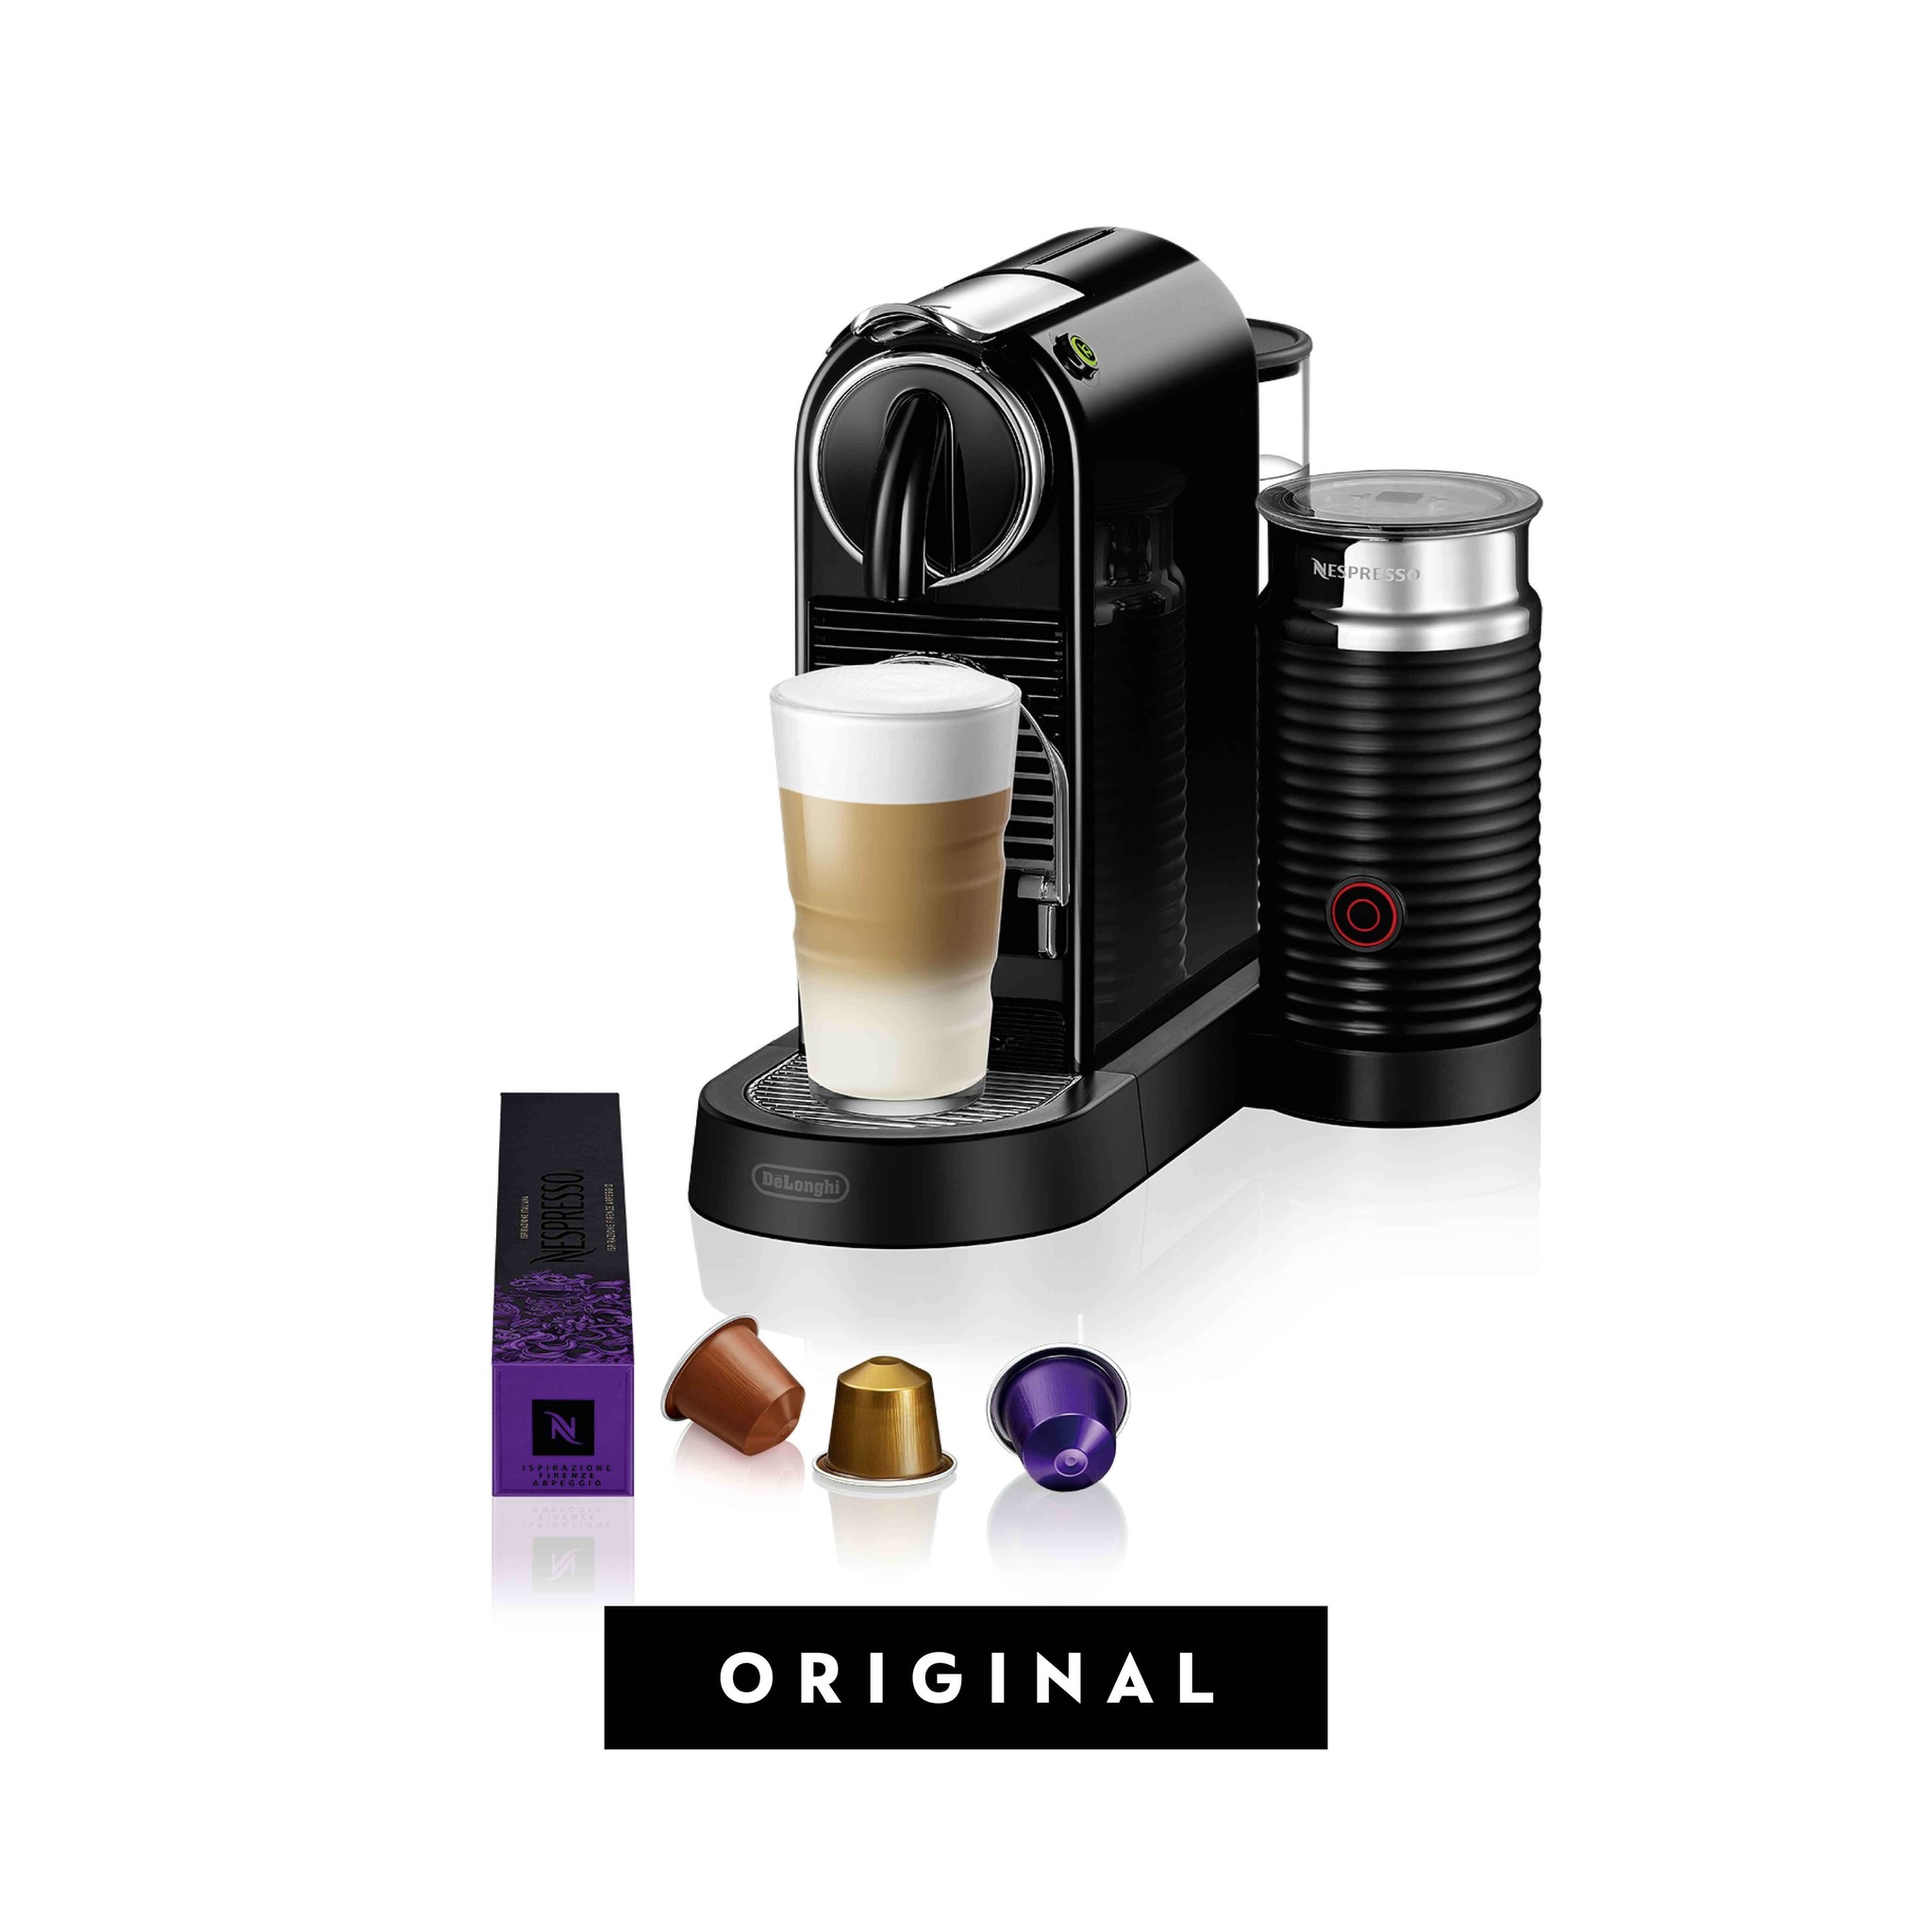 Nespresso® CitiZ&Milk Espresso Machine by De'Longhi, Black | Ares - Ares Kitchen and Baking